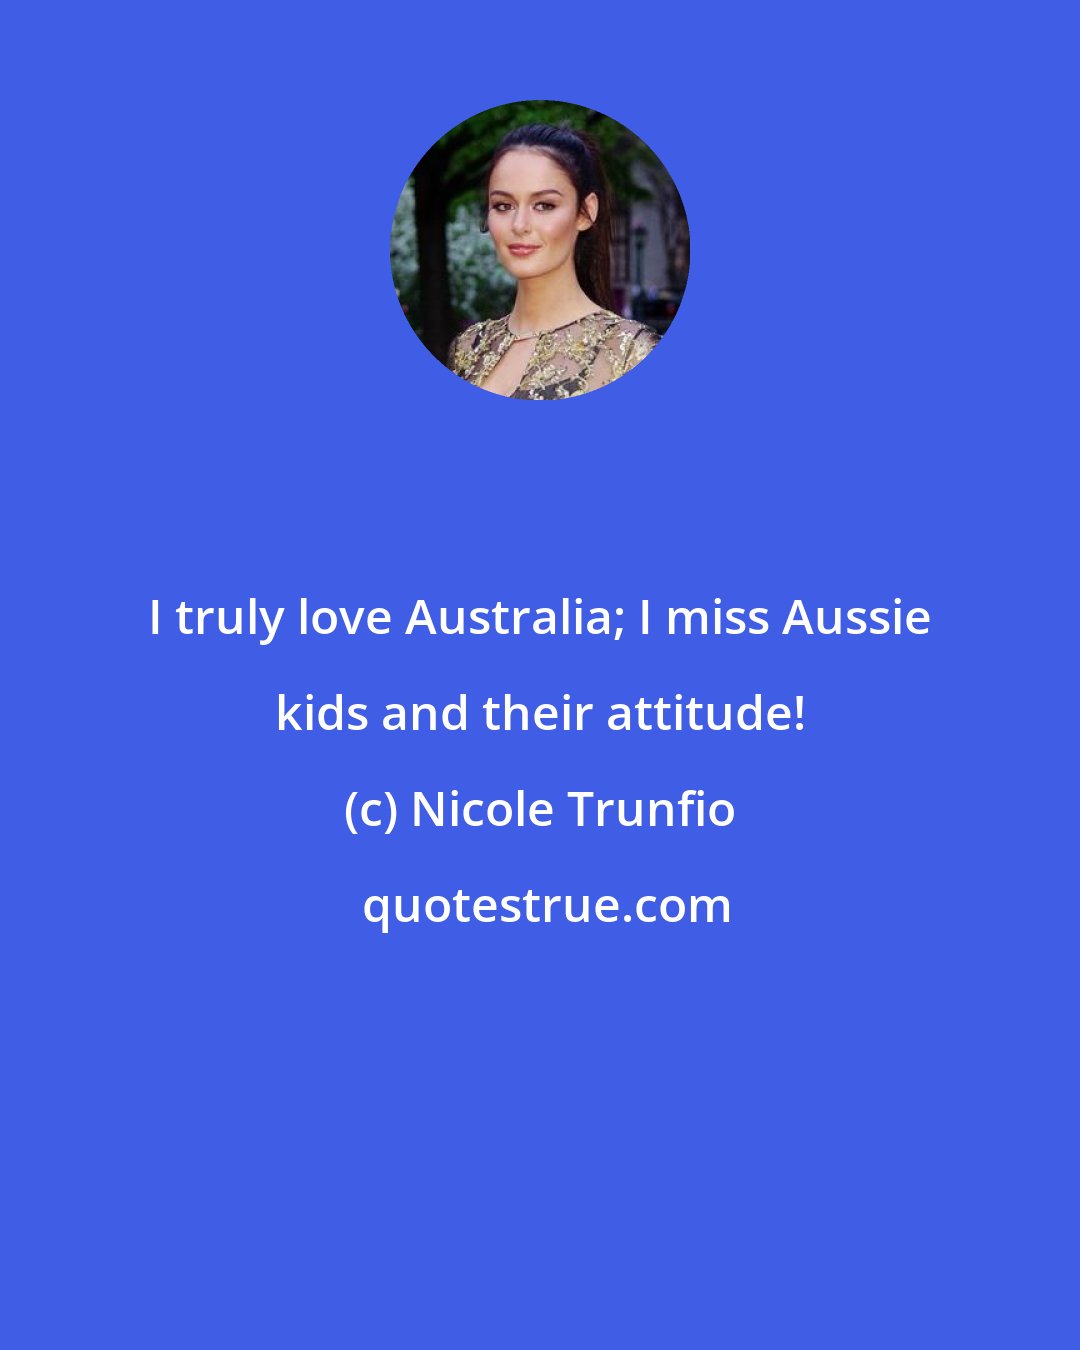 Nicole Trunfio: I truly love Australia; I miss Aussie kids and their attitude!